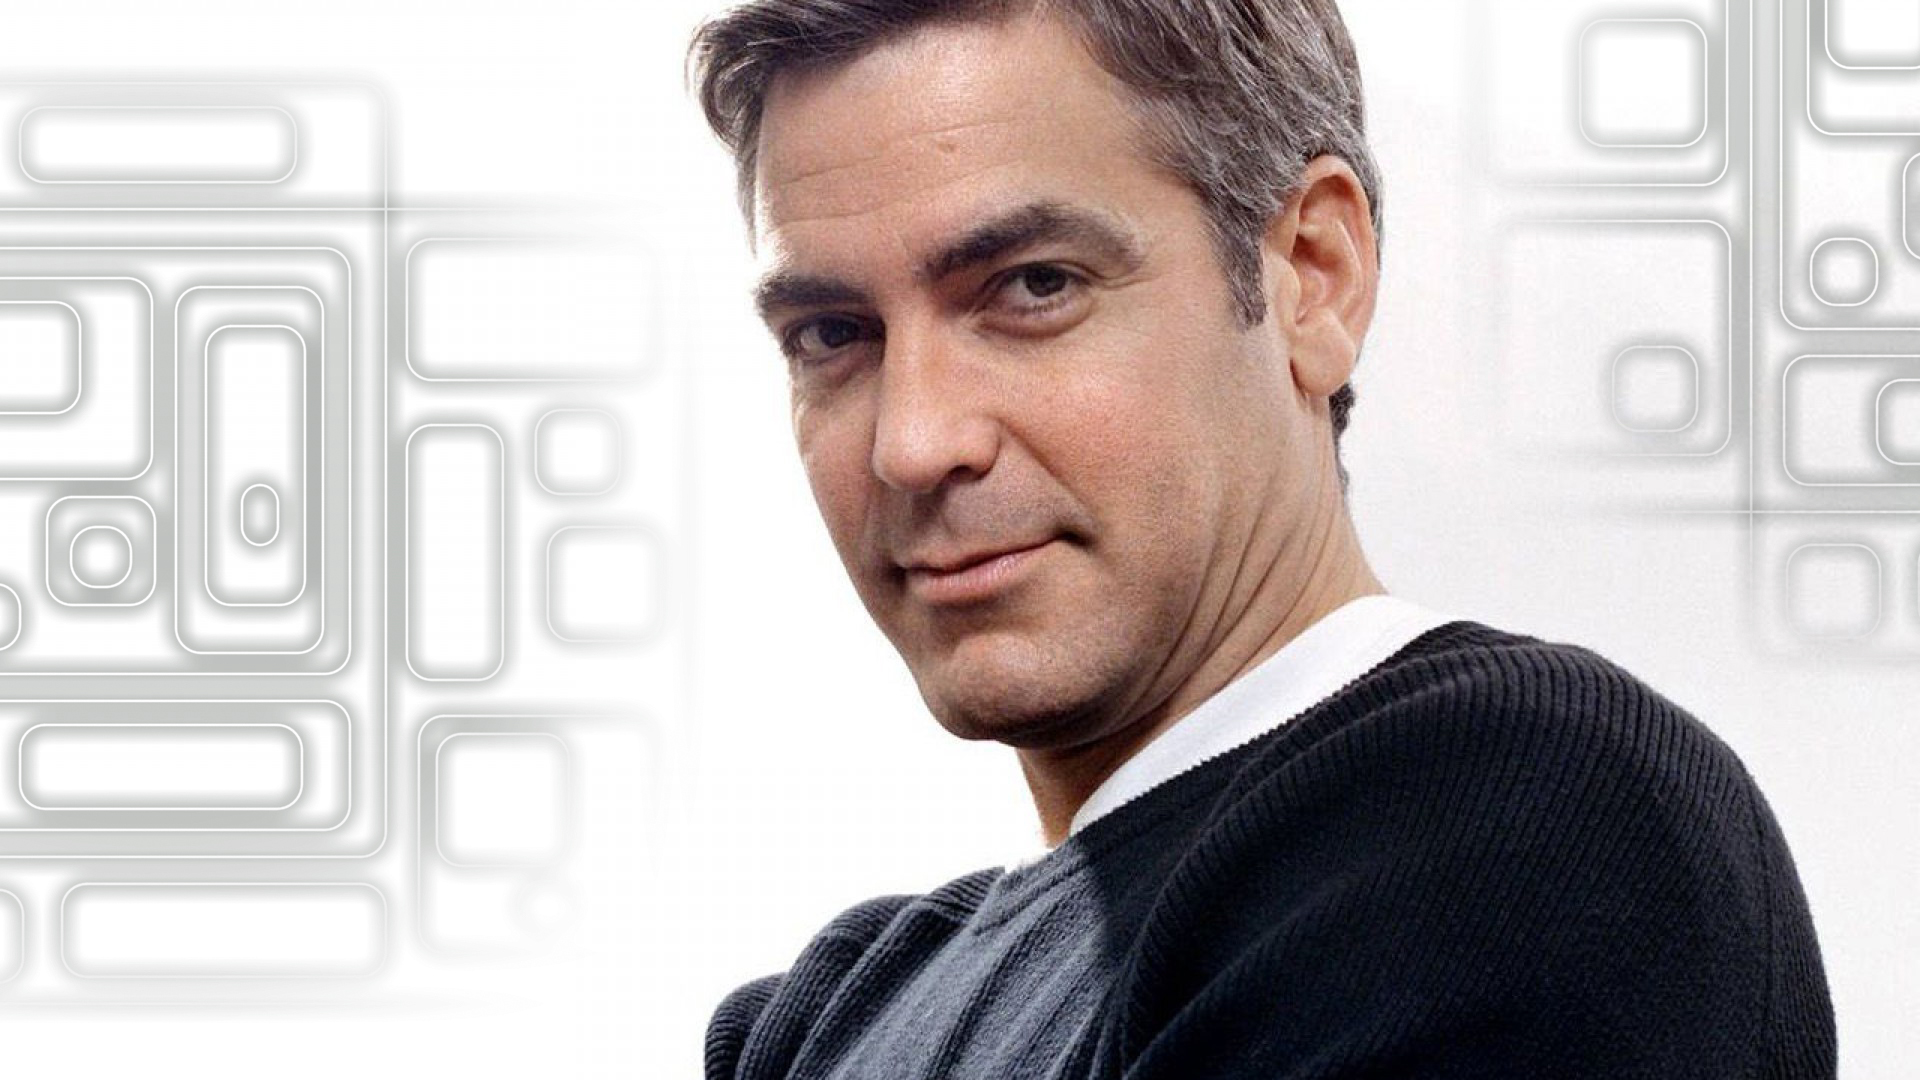 HD George Clooney Wallpaper HDcoolwallpaper